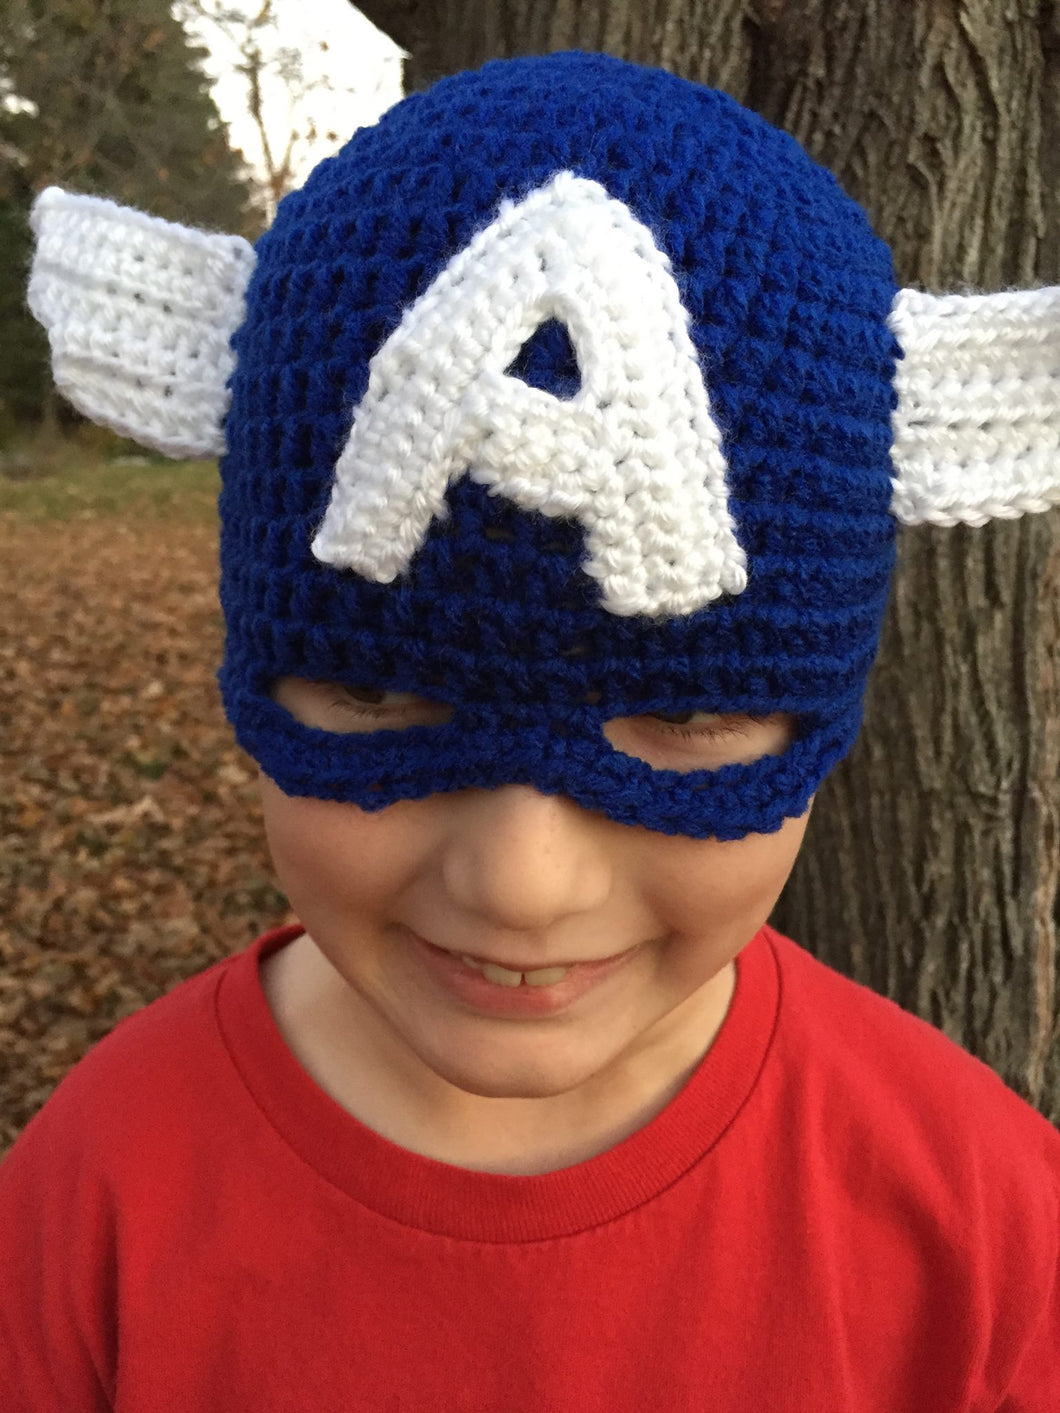 Crochet Captain America Hat